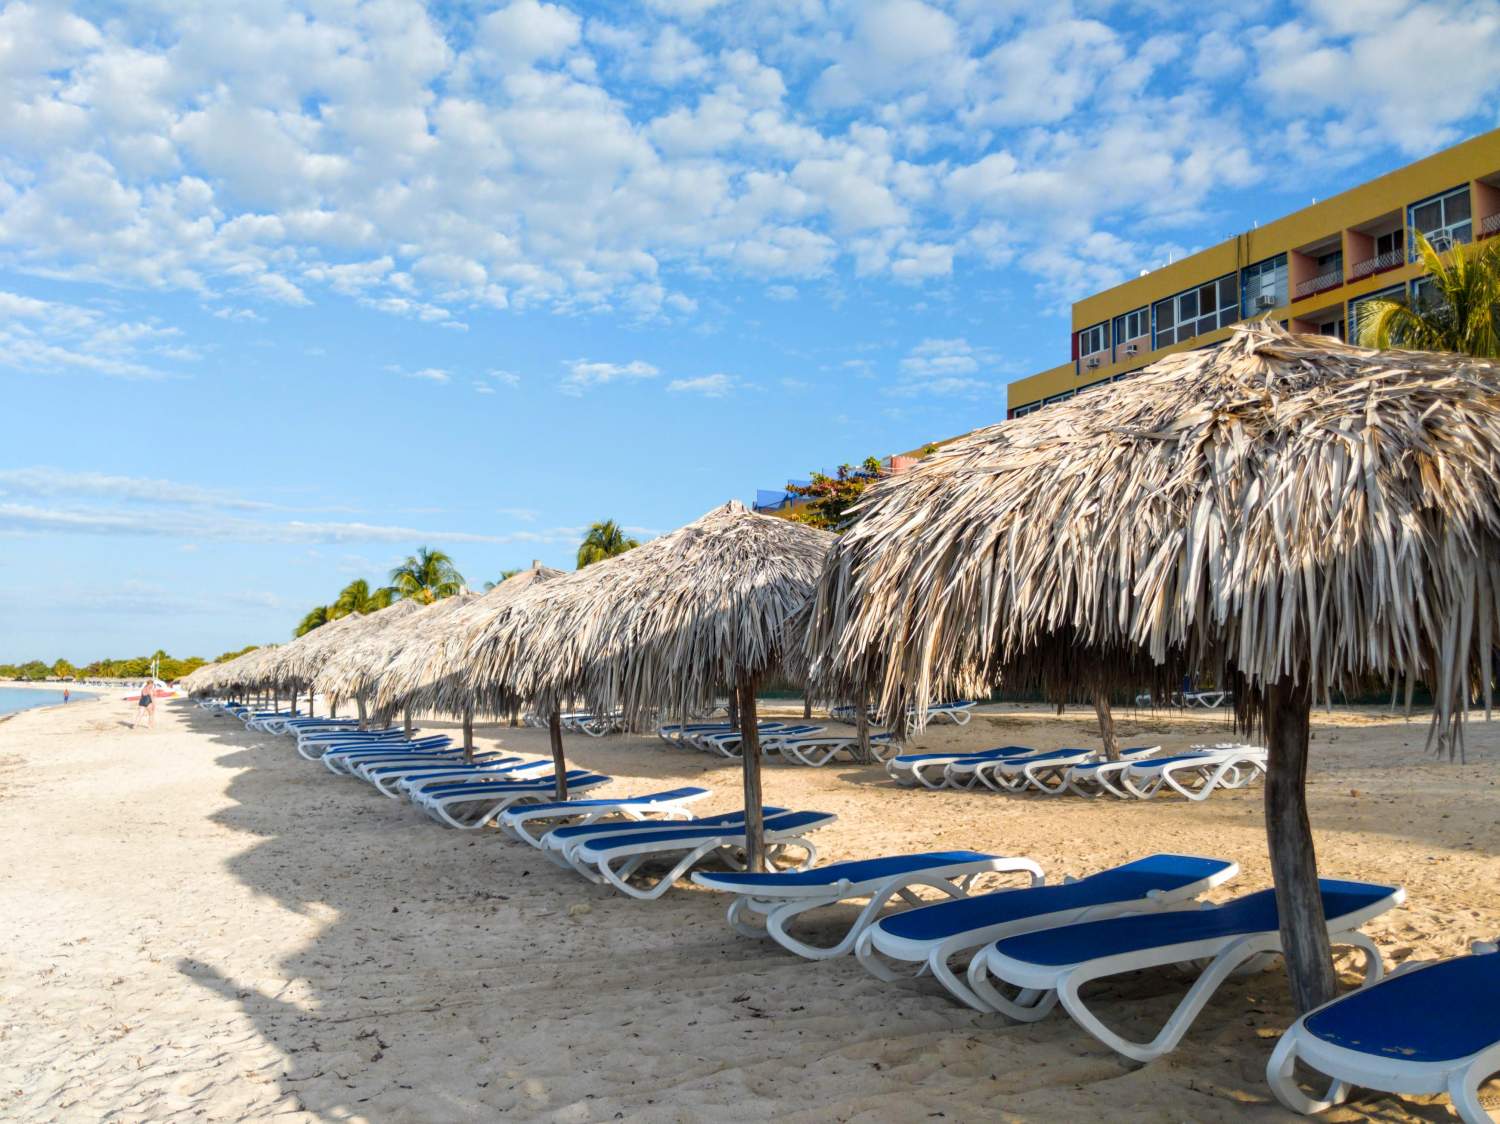 Playa Ancon beach, Cuba